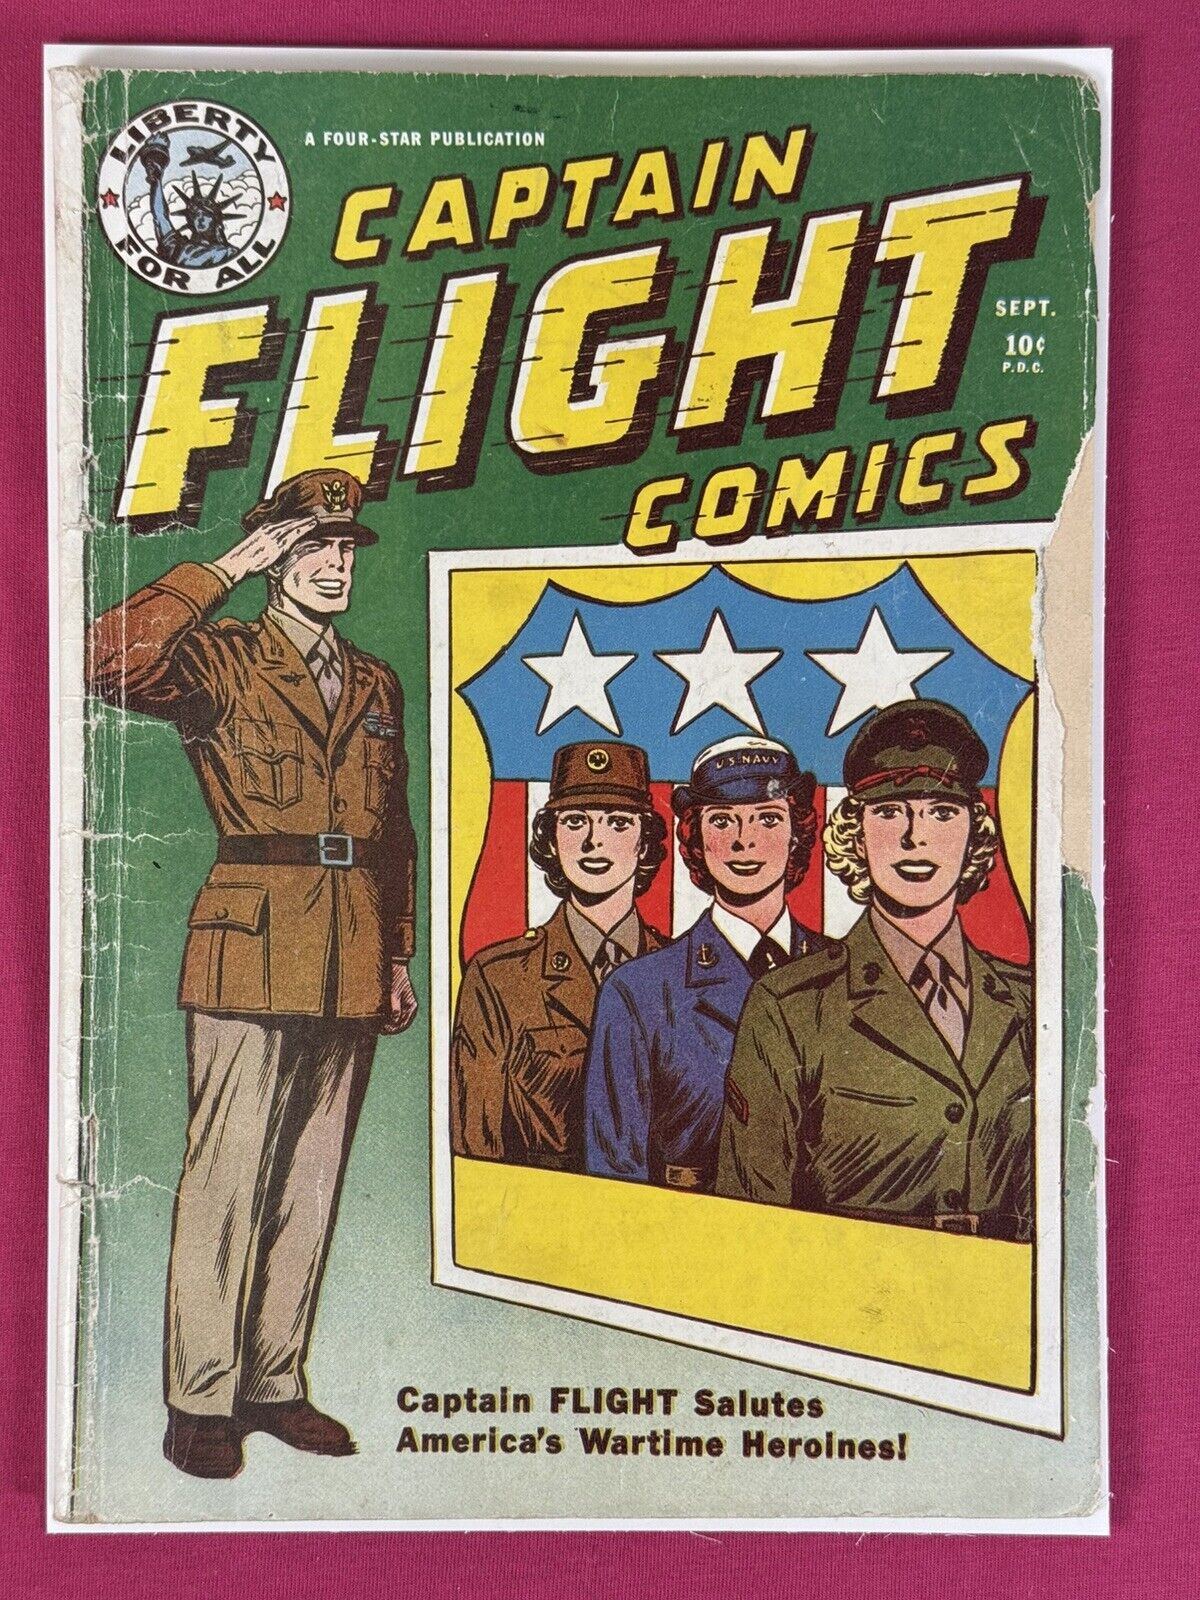 SCARCE 1944 Captain Flight Comics #4 - GOOD - Four Star Publications - KIEFER